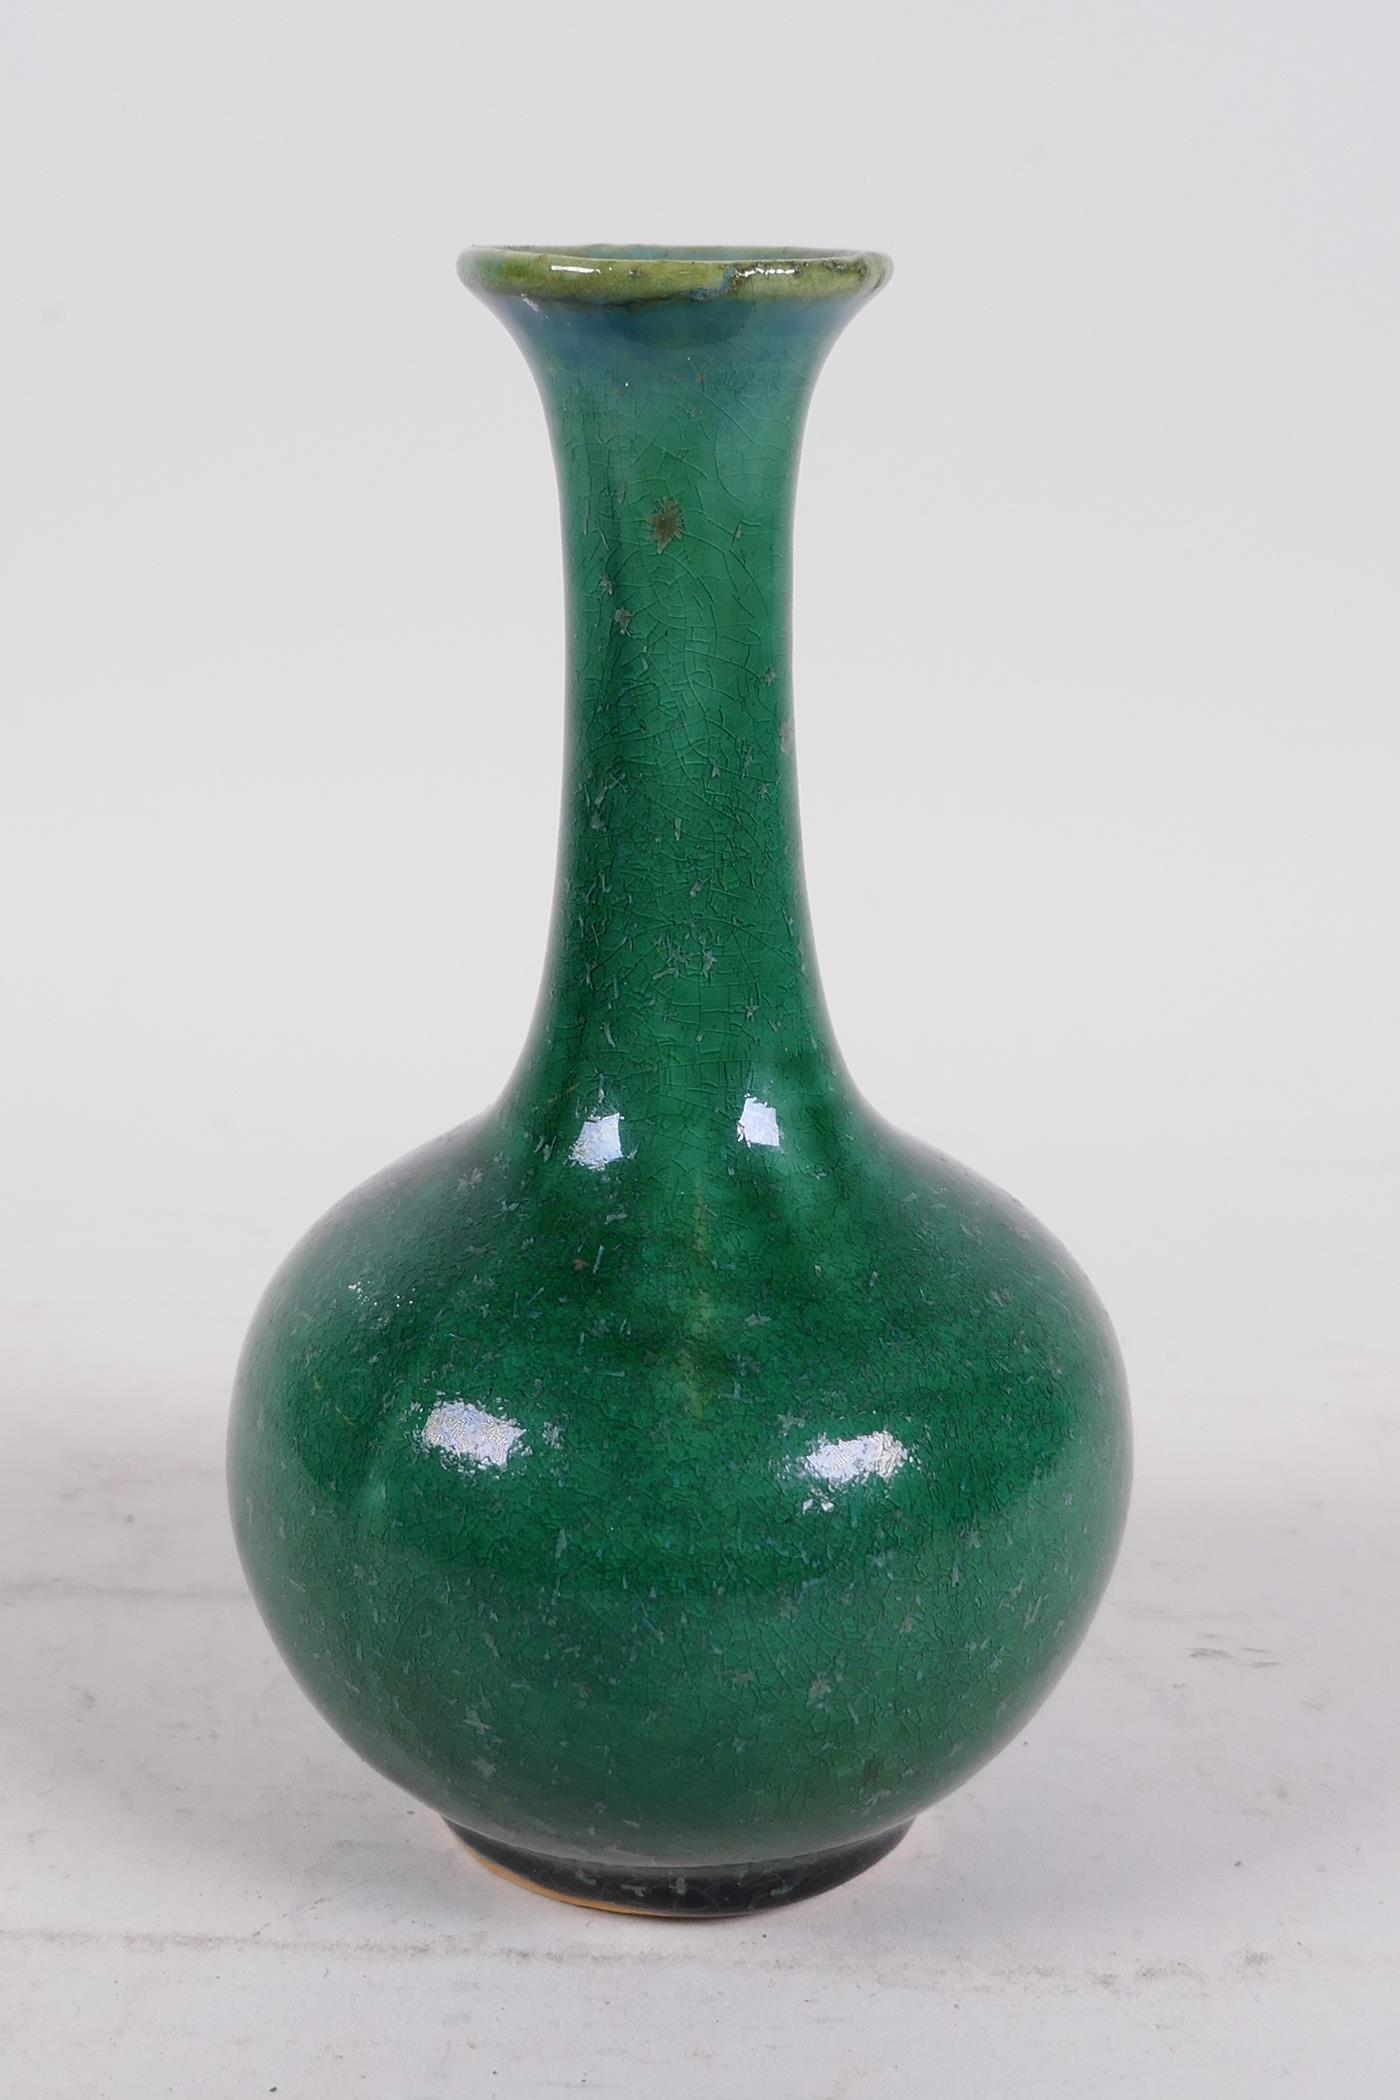 A Chinese mottled green glazed pottery bottle vase, 6" high - Image 2 of 4